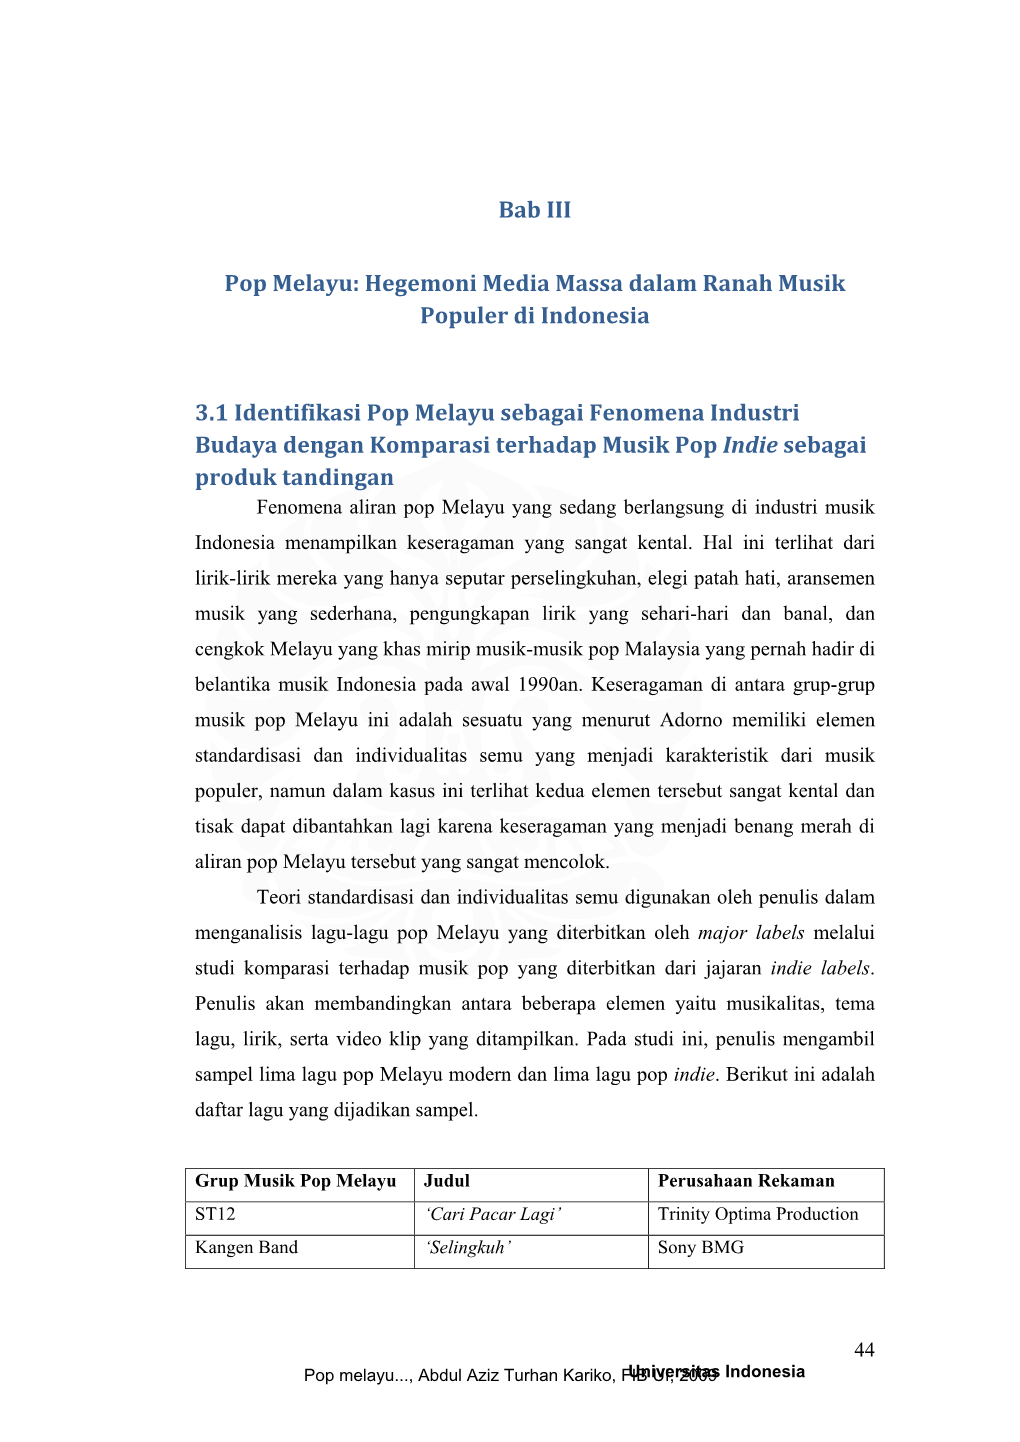 Bab III Pop Melayu: Hegemoni Media Massa Dalam Ranah Musik Populer